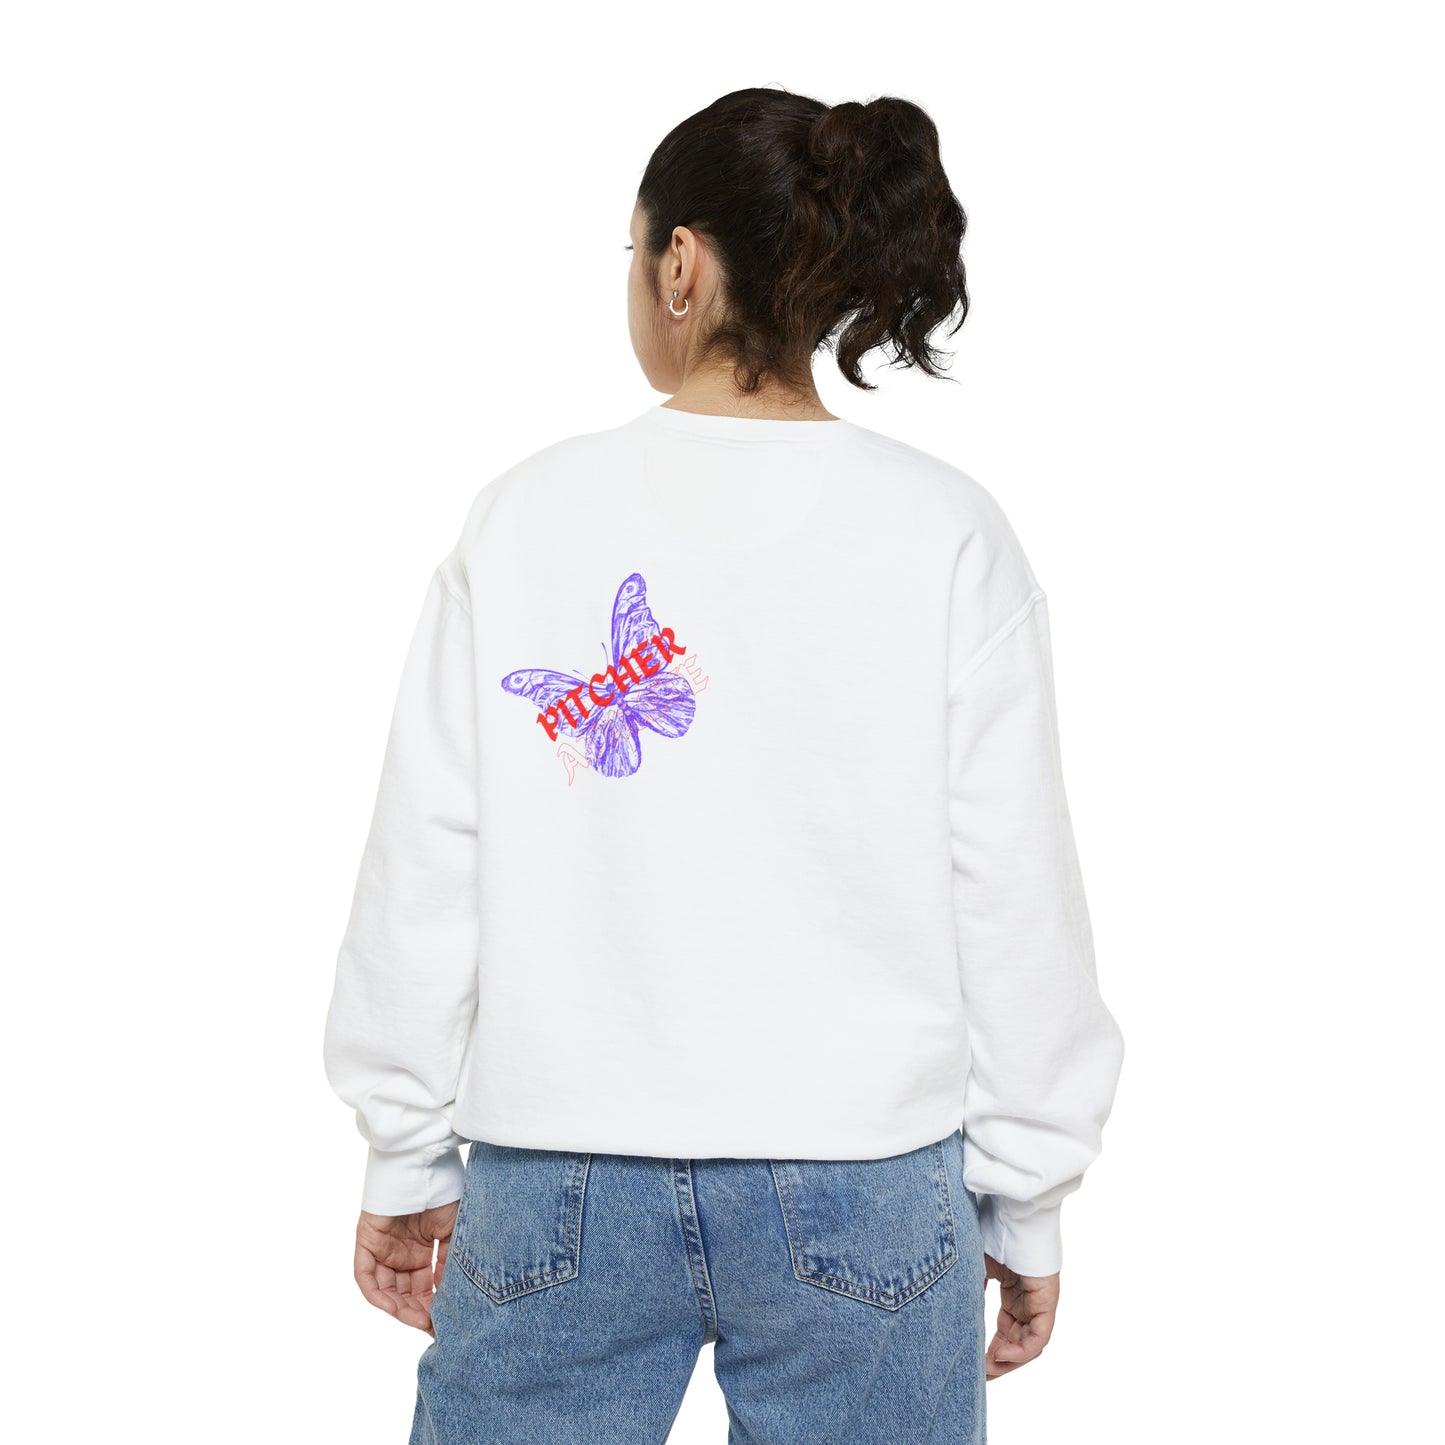 "No Po" Unisex Garment-Dyed Sweatshirt